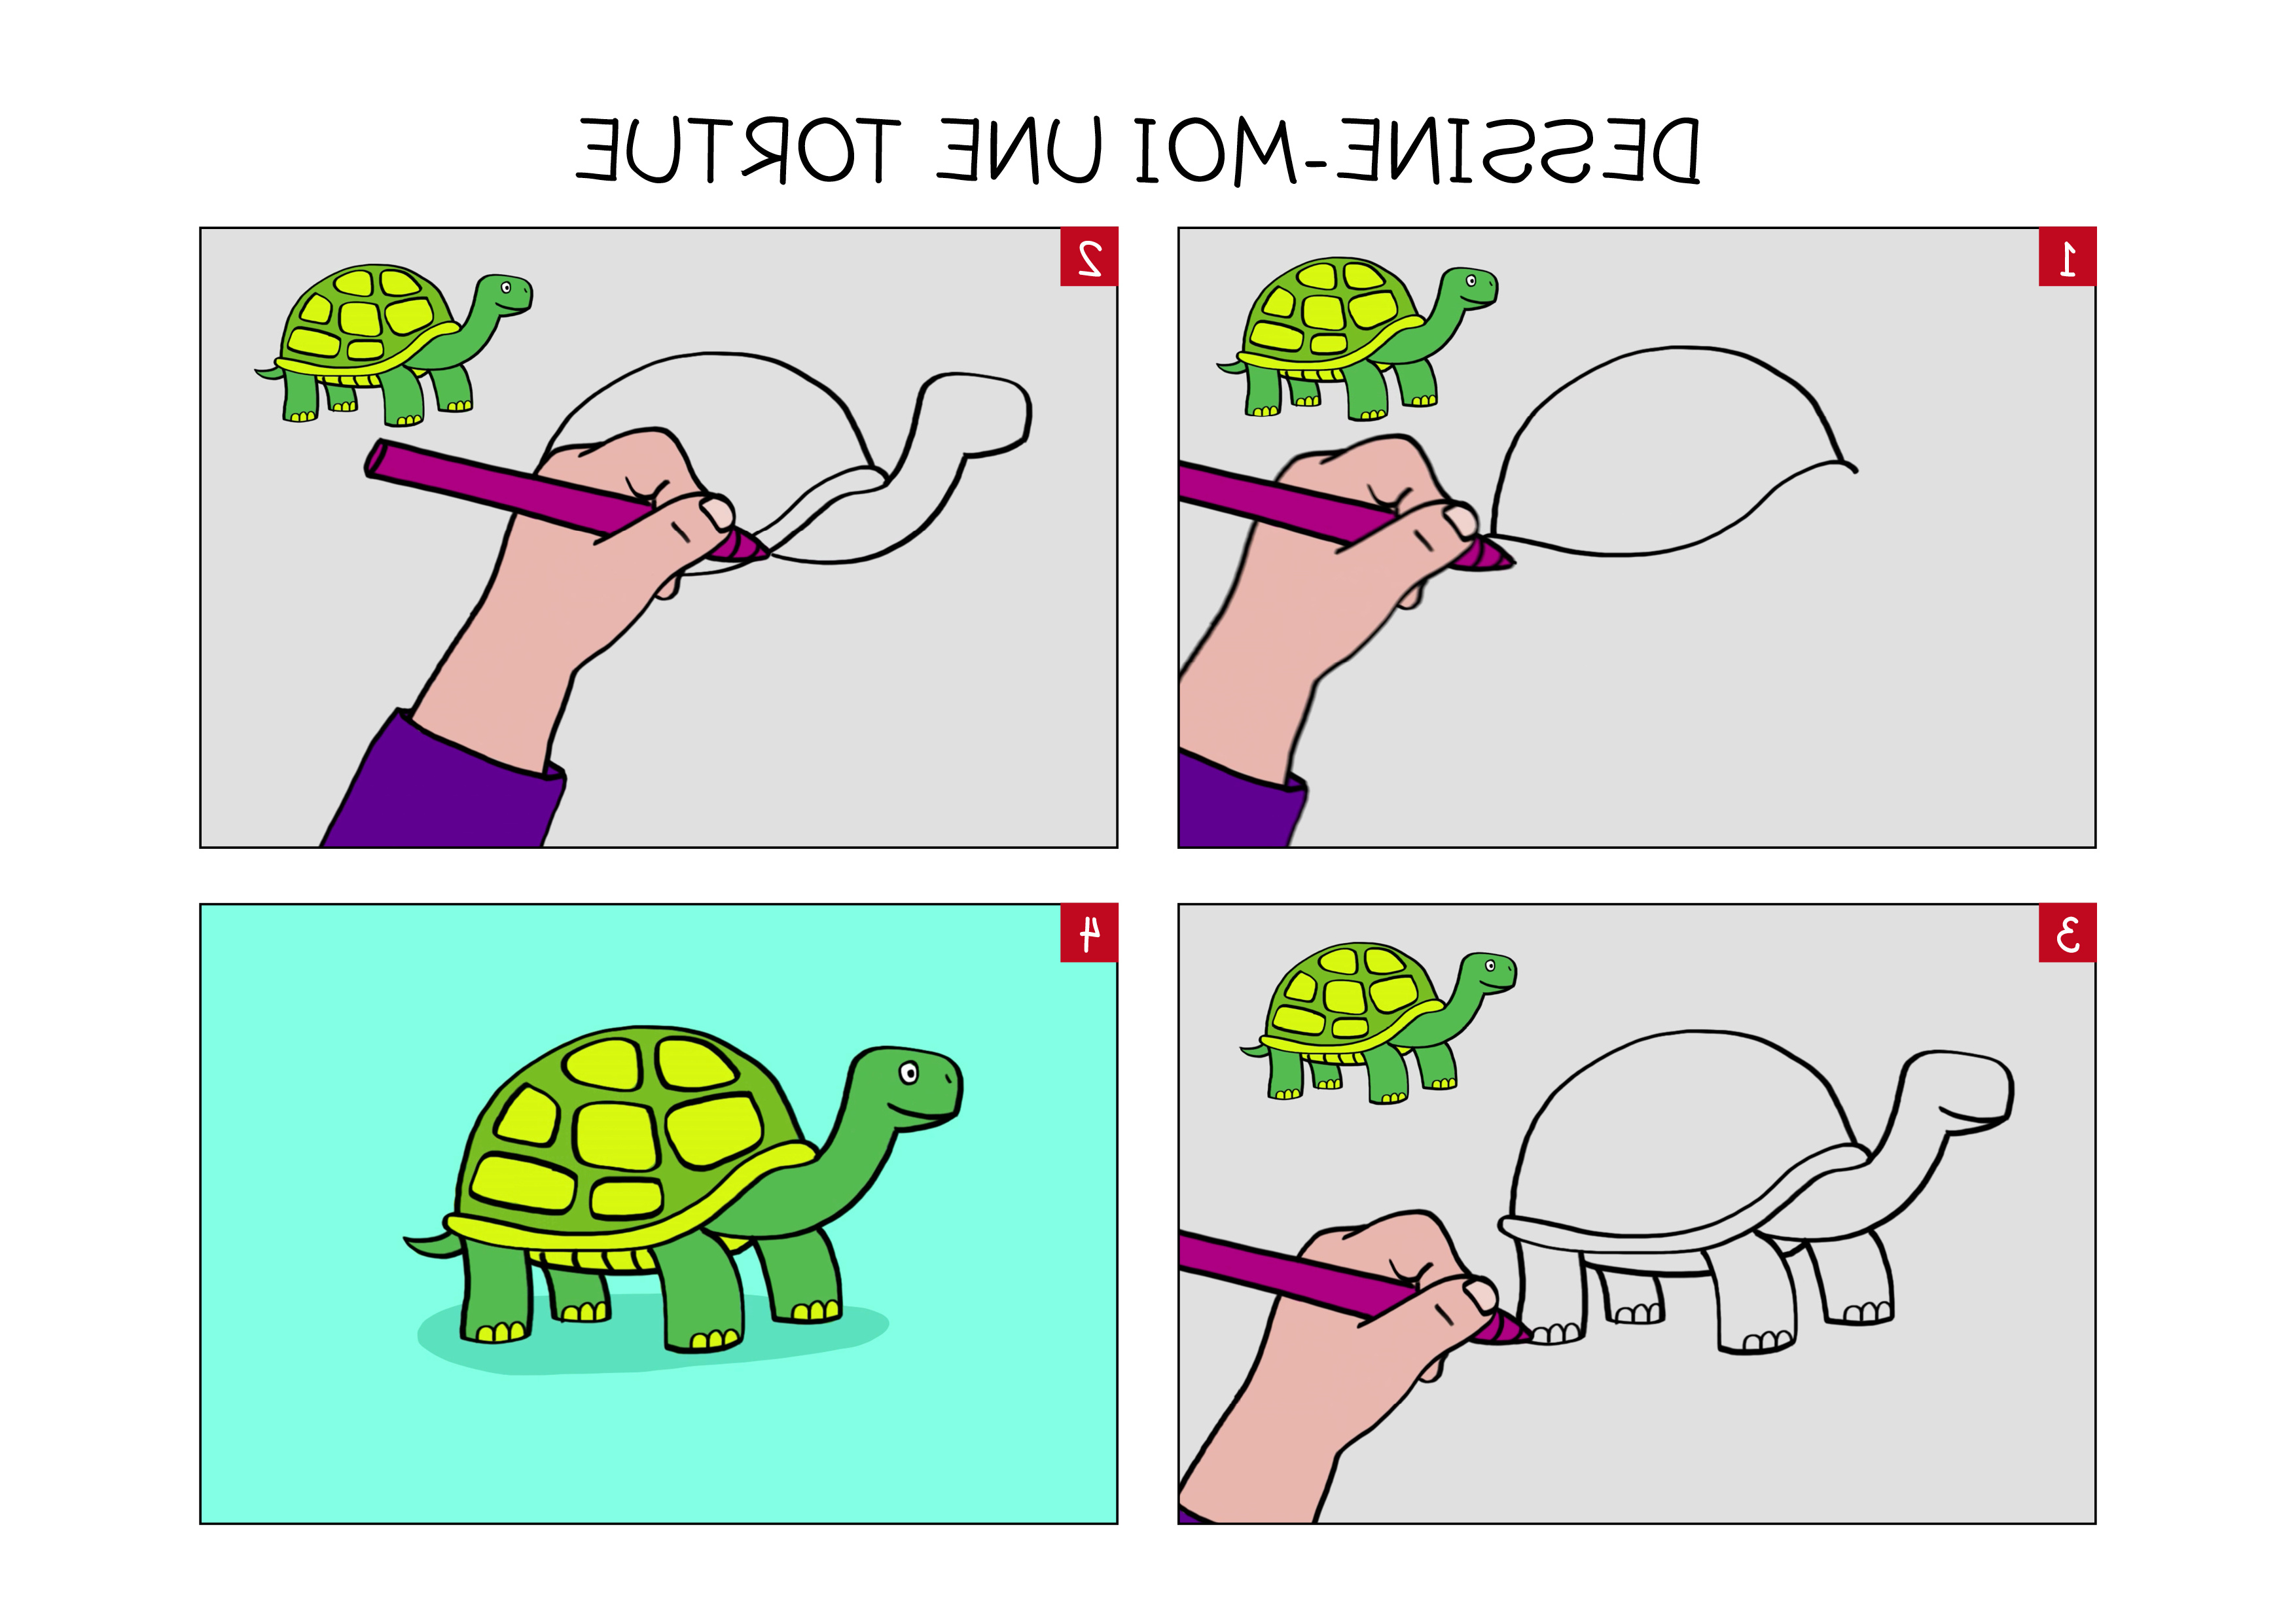 apprendre a dessiner une tortue en 3 etapes